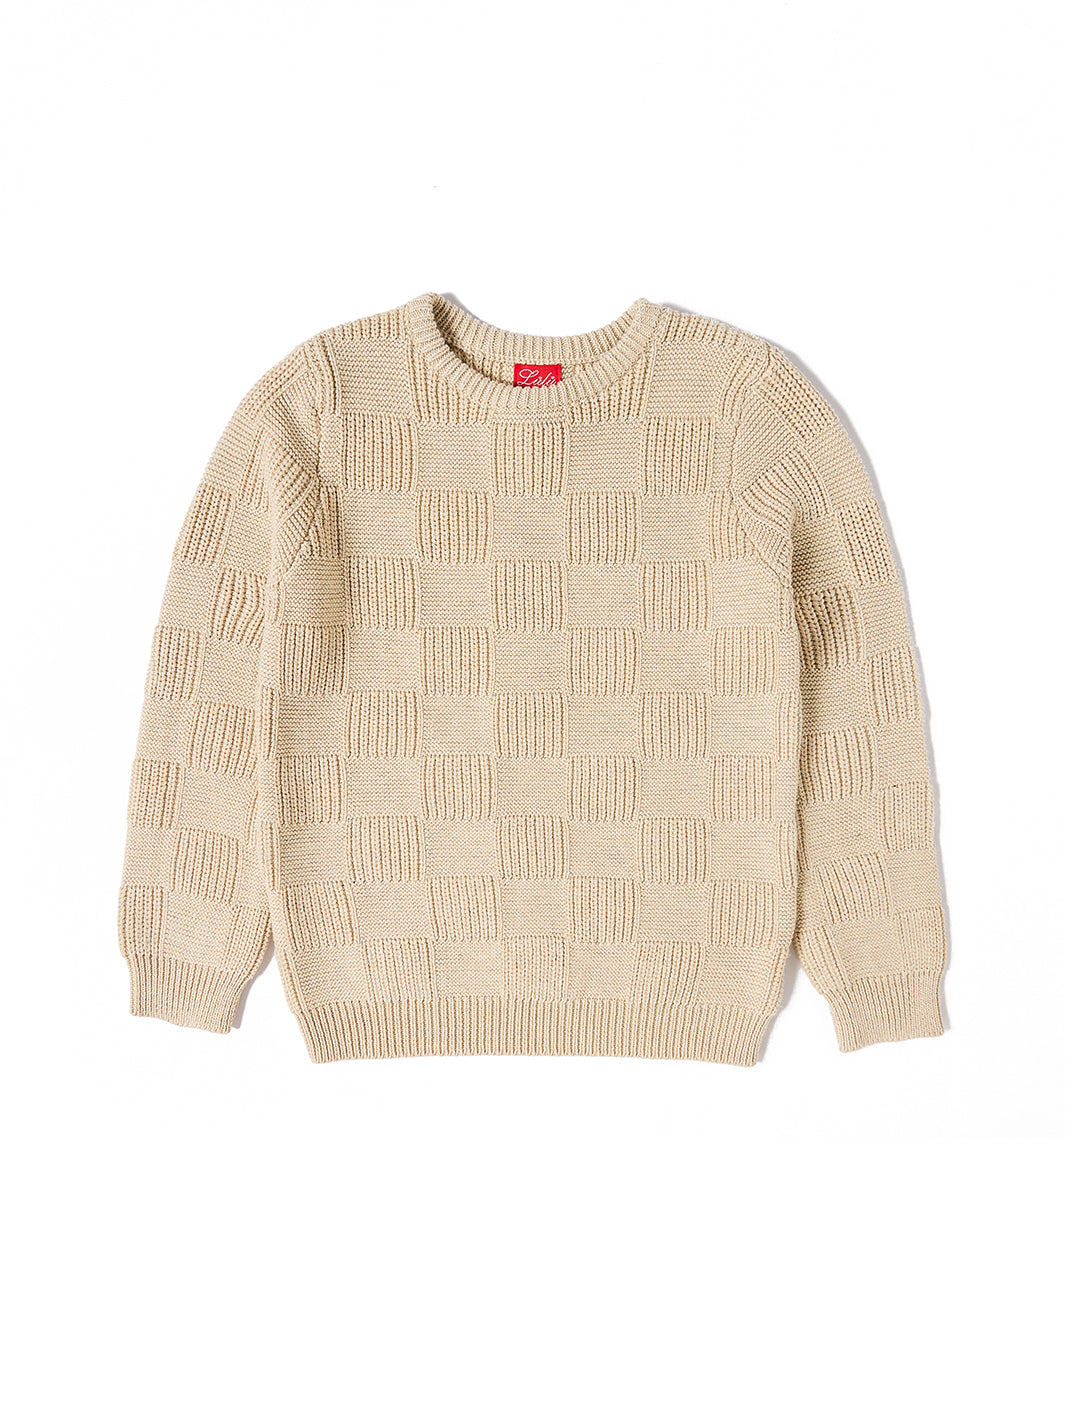 Square Knit Sweater - Lt. Cream Mix